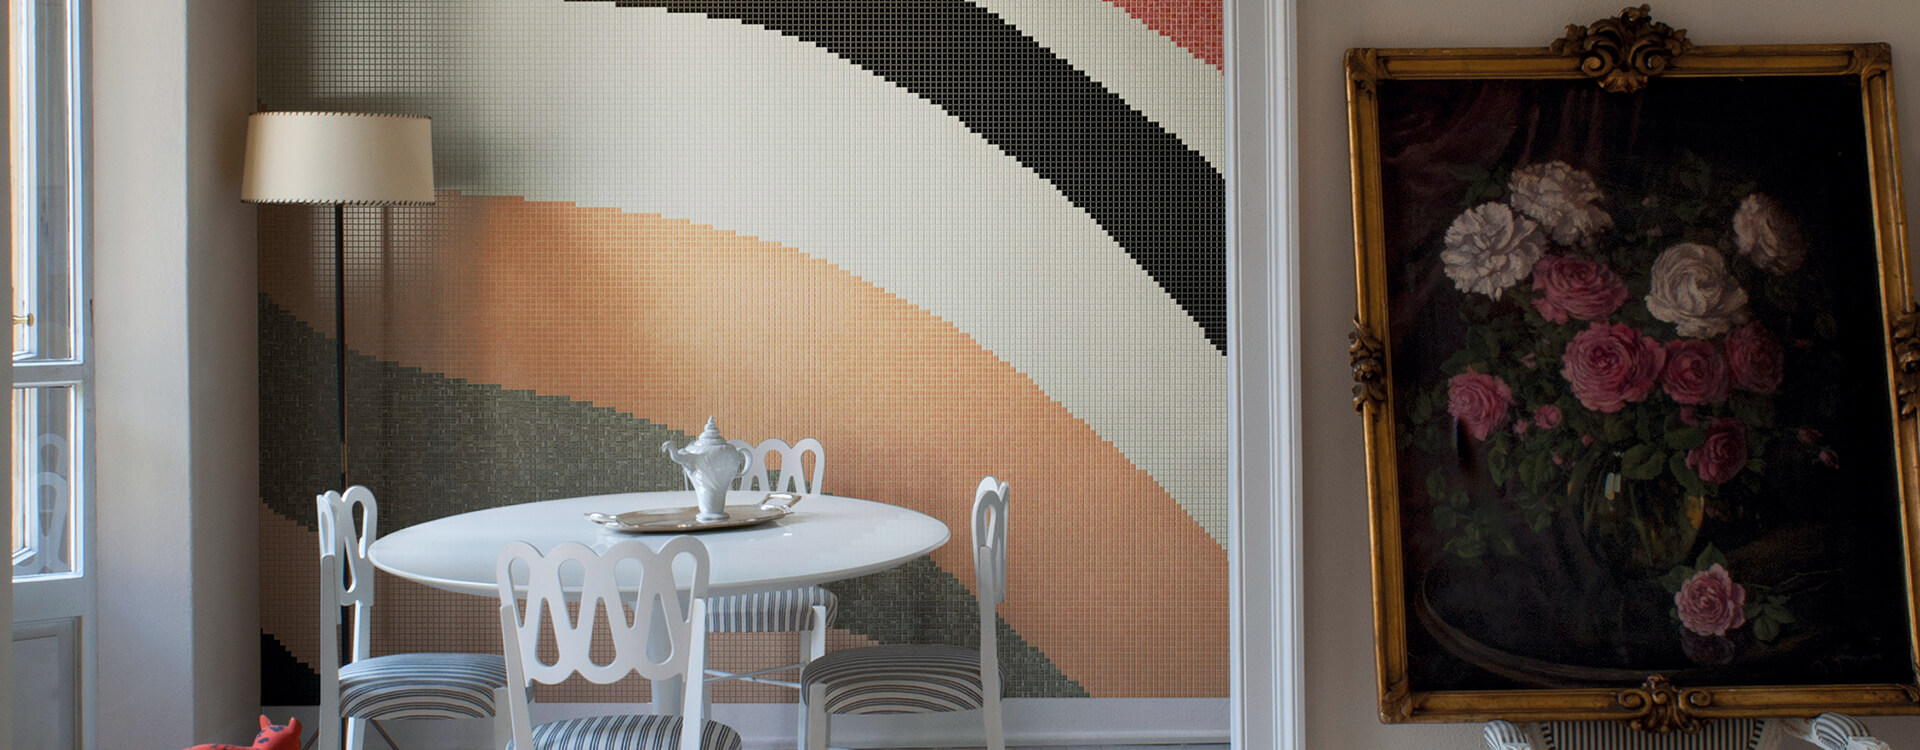 Emilio Pucci and Bisazza Go Pop with Vivid Tile Mosaics